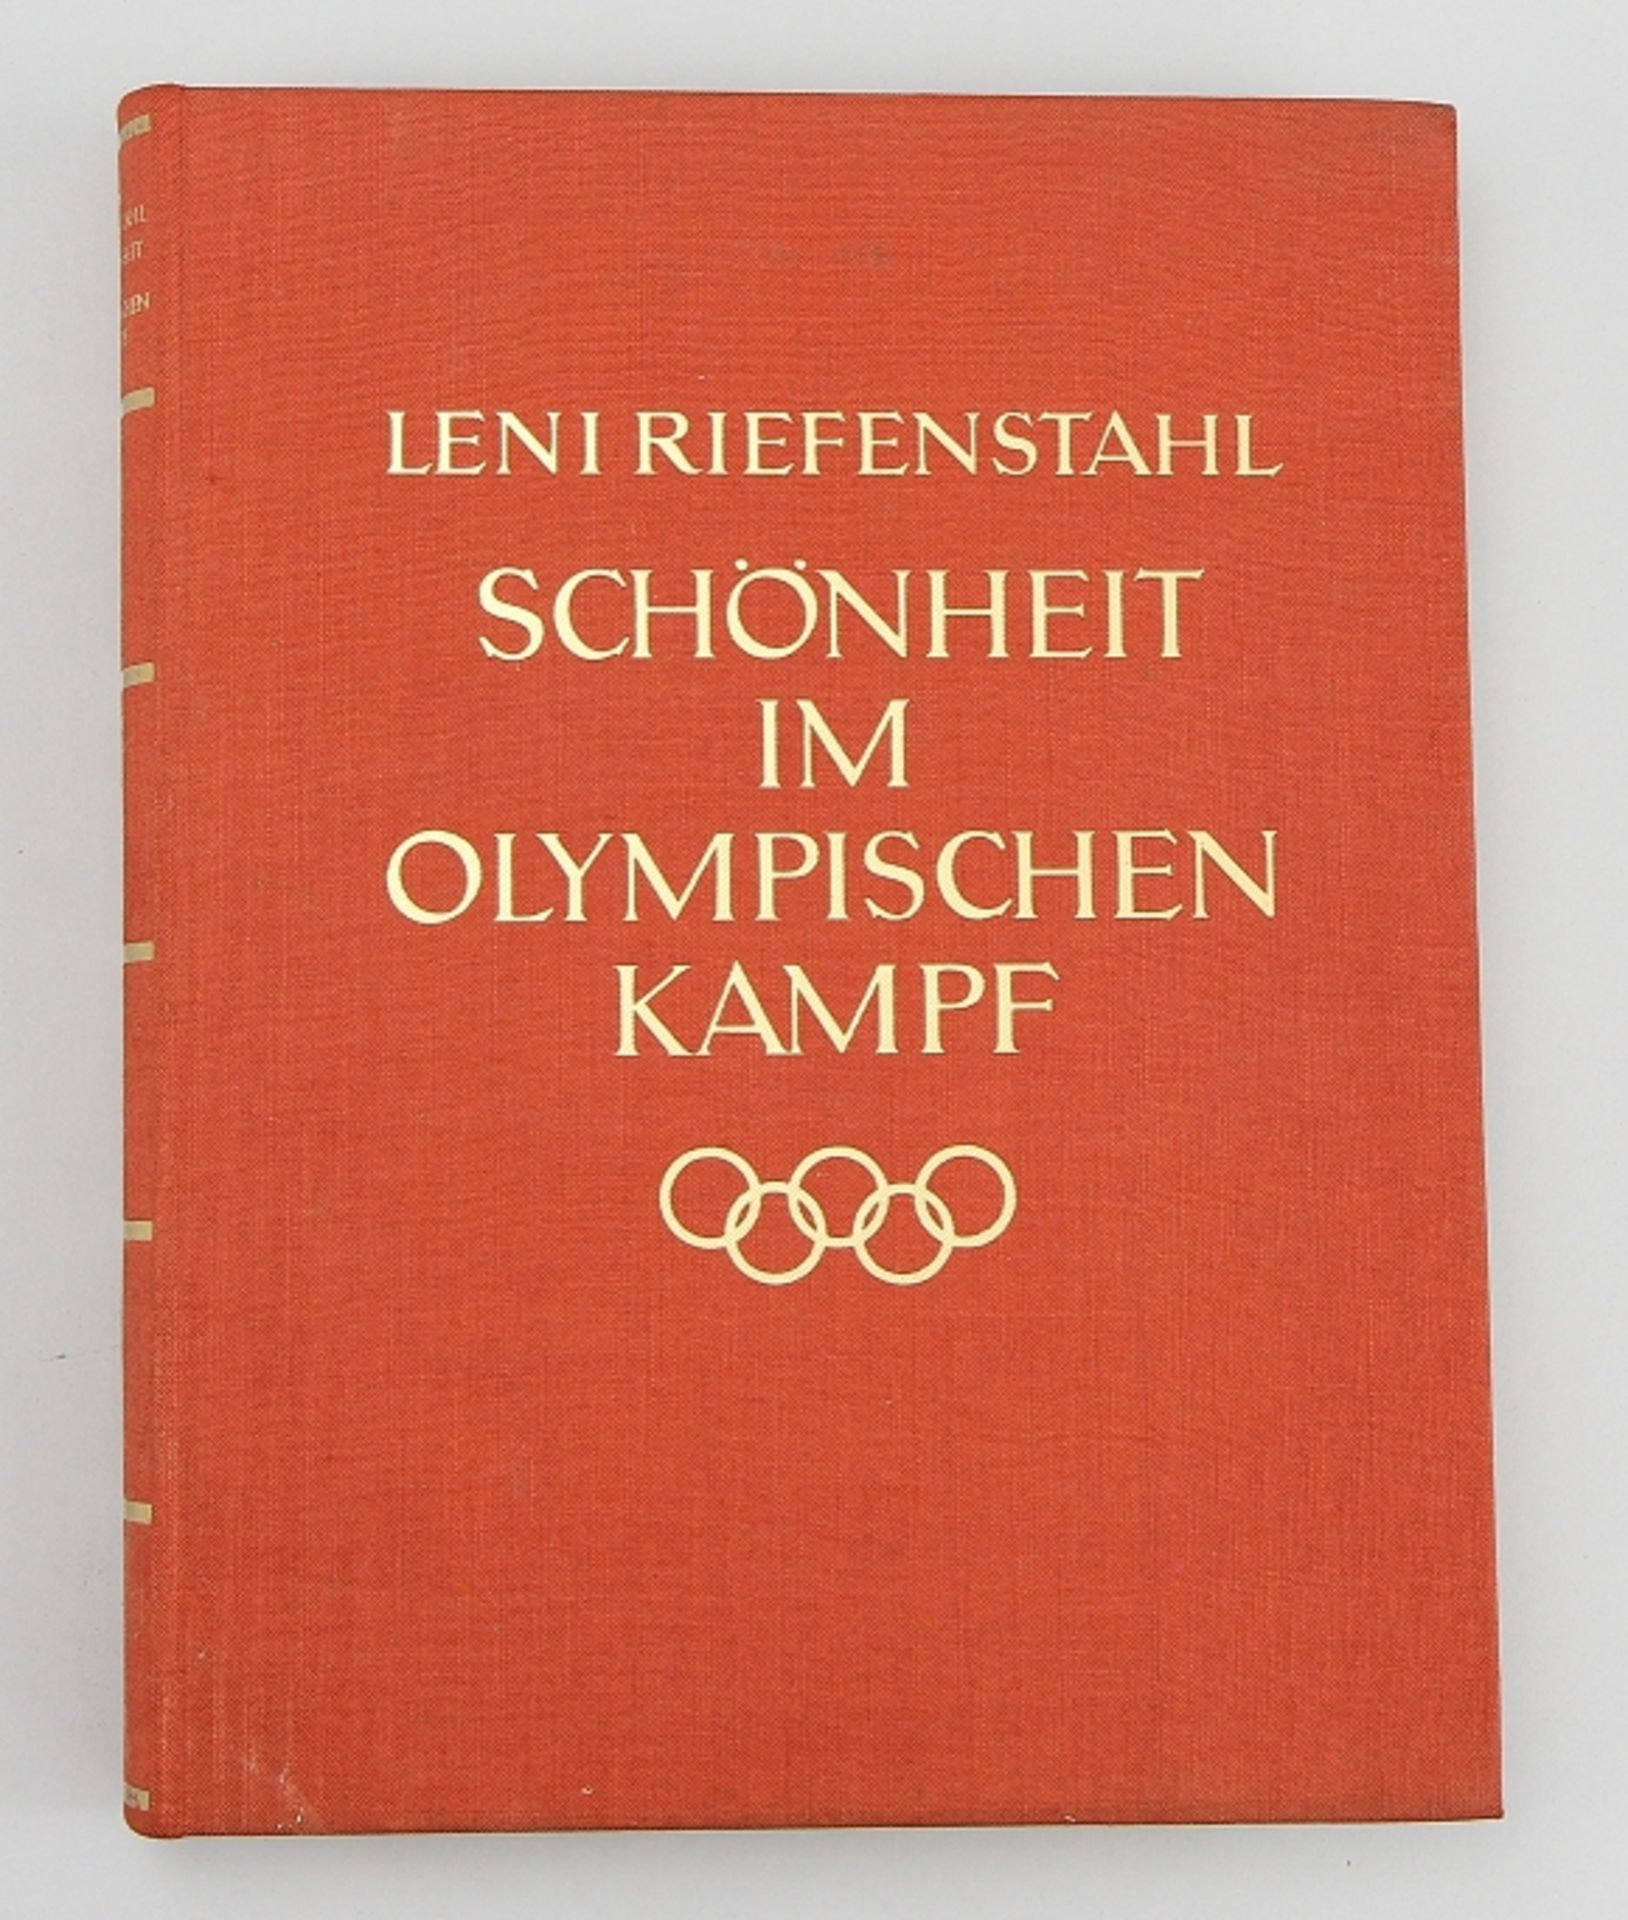 Riefenstahl, Leni (1902 - 2003)